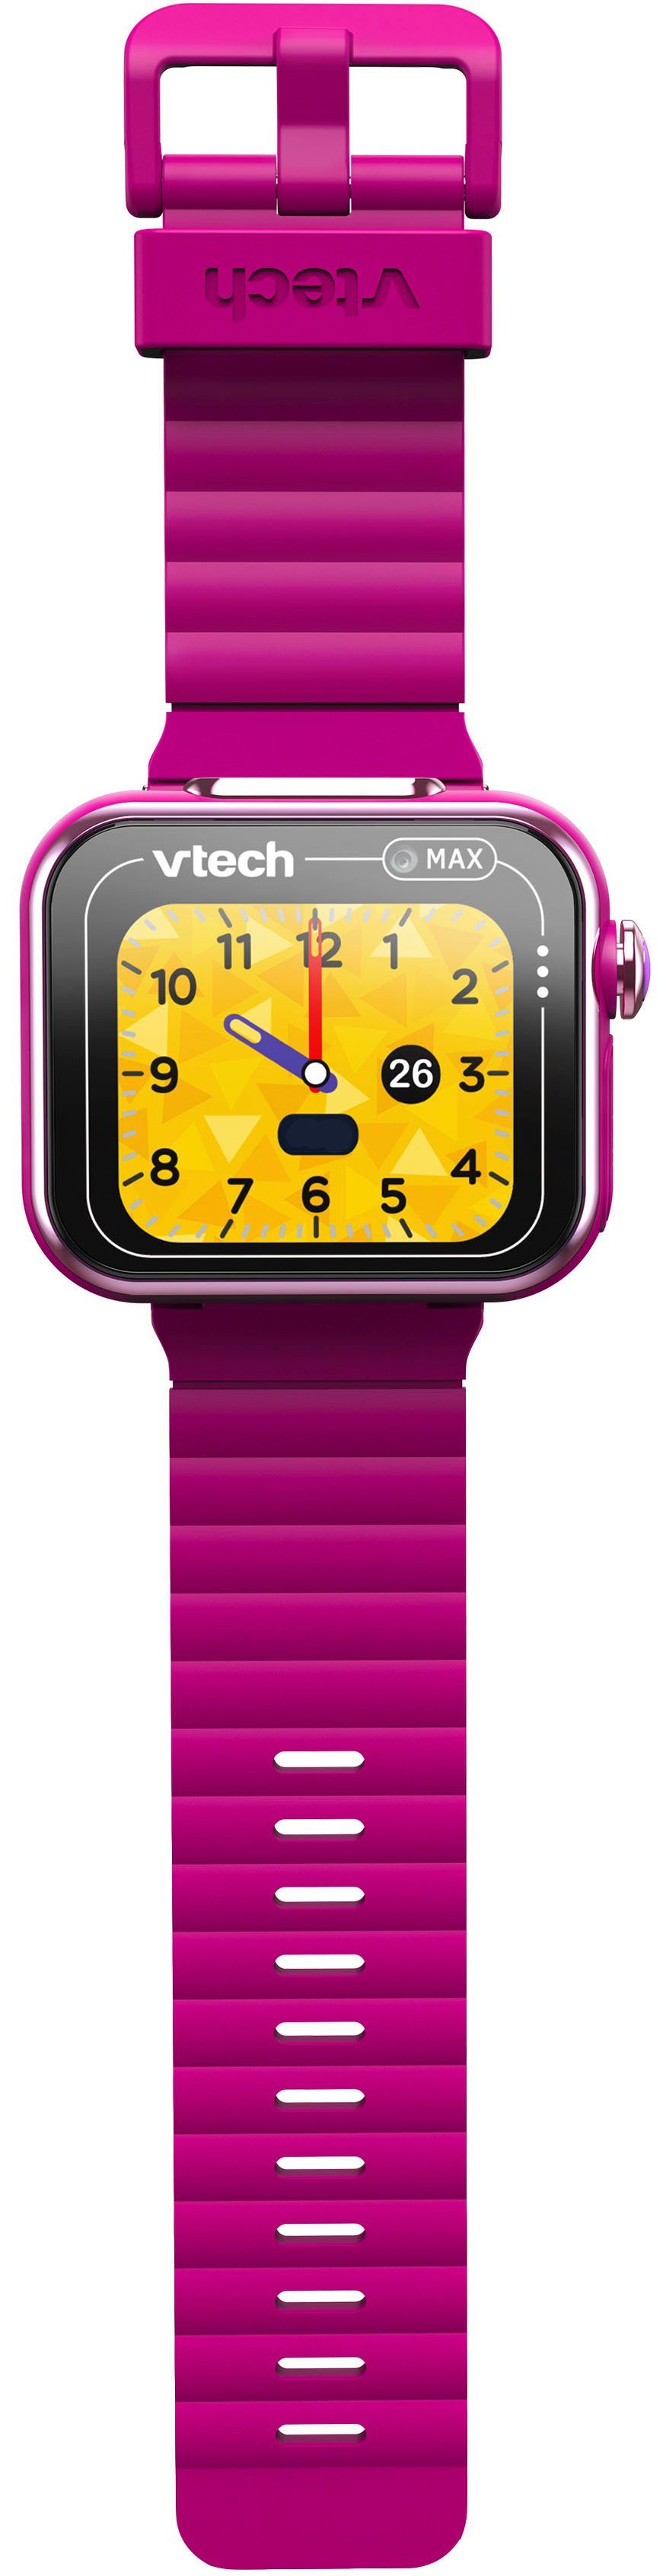 Vtech® Lernspielzeug KidiZoom lila MAX Smart Watch